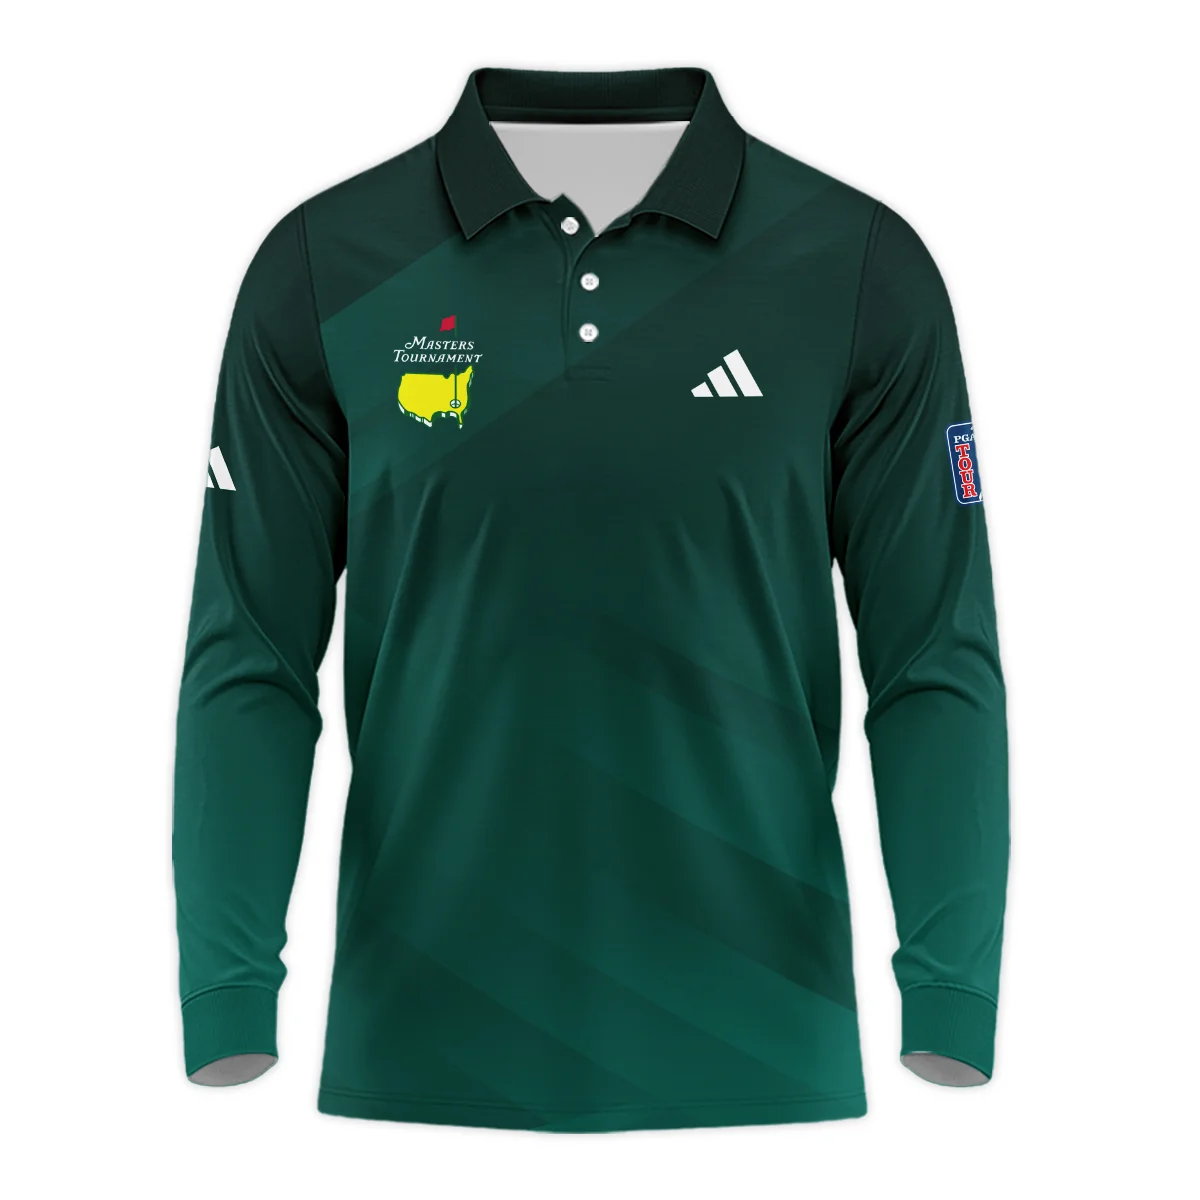 Masters Tournament Dark Green Gradient Golf Sport Adidas Unisex T-Shirt Style Classic T-Shirt